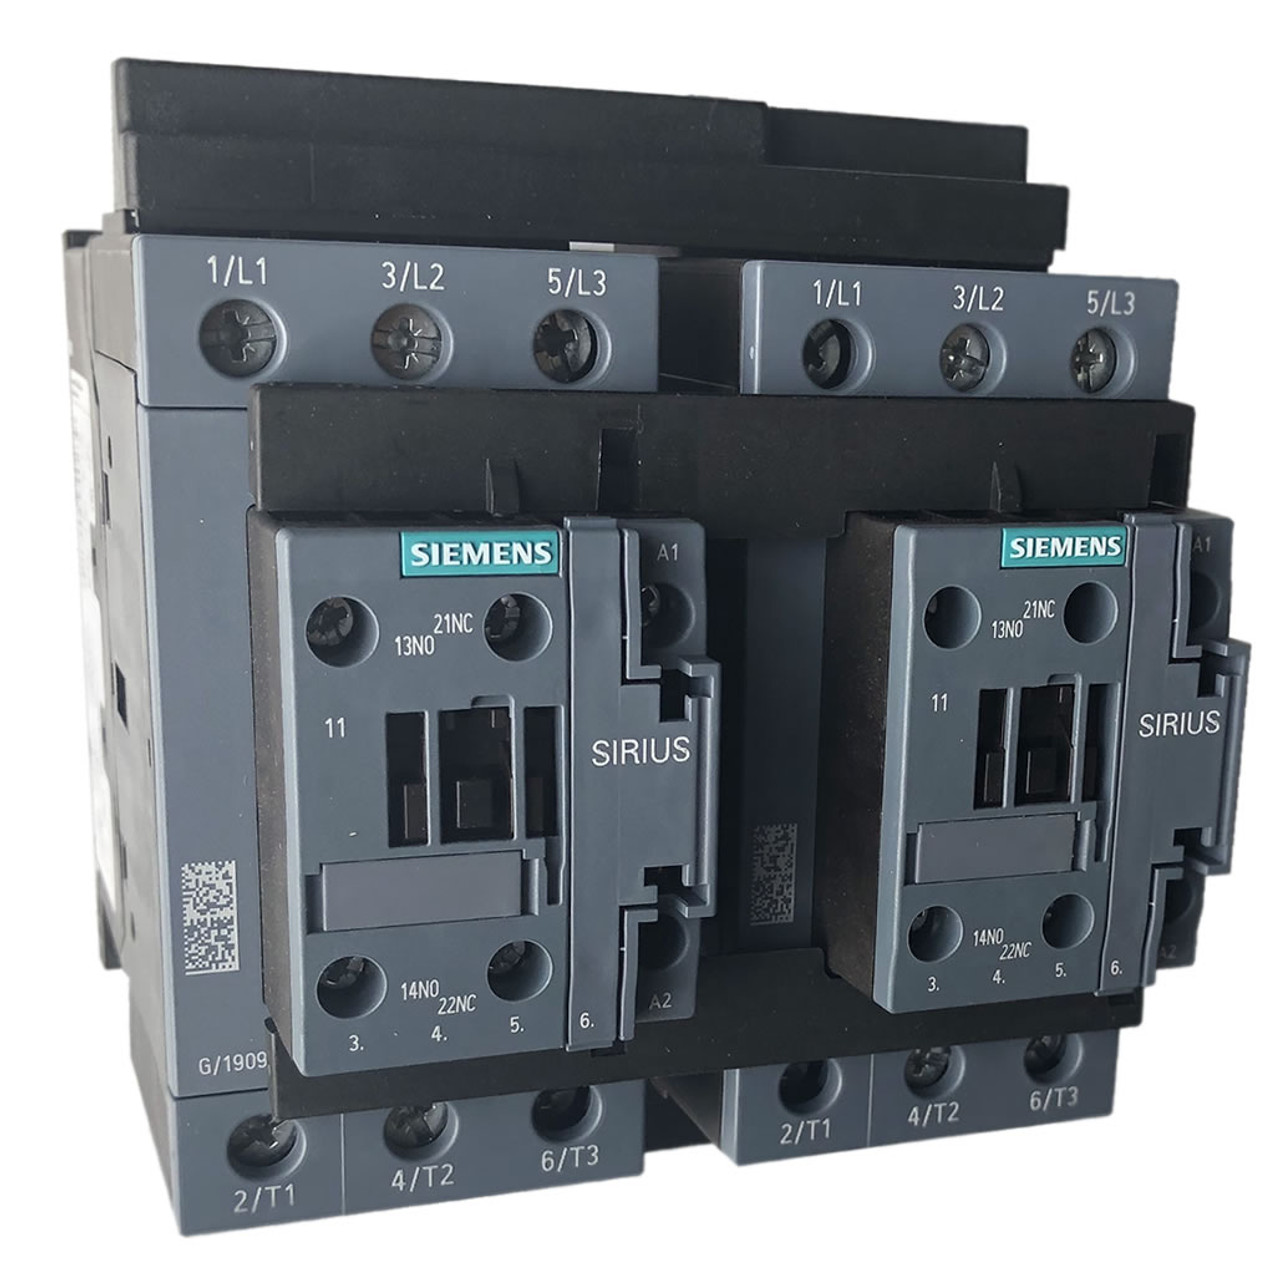 Siemens 3RA2335-8XB30-1AL2 reversing contactor